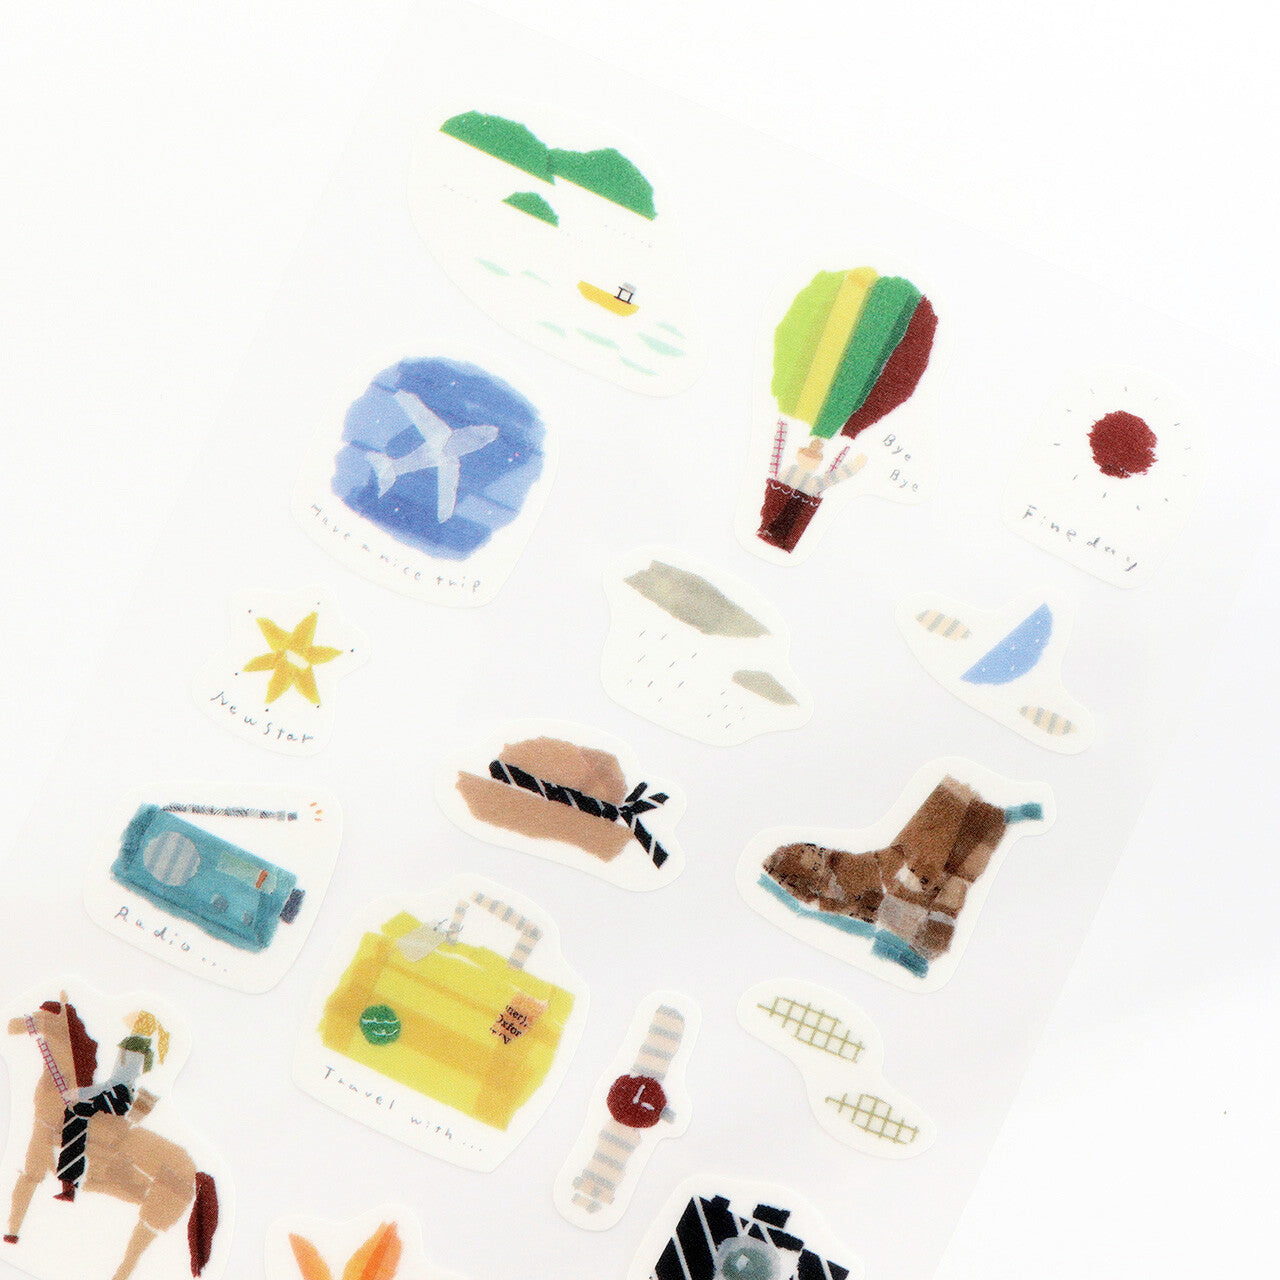 Saien x Miki Tamura Washi Art Sticker Sheet - Trip